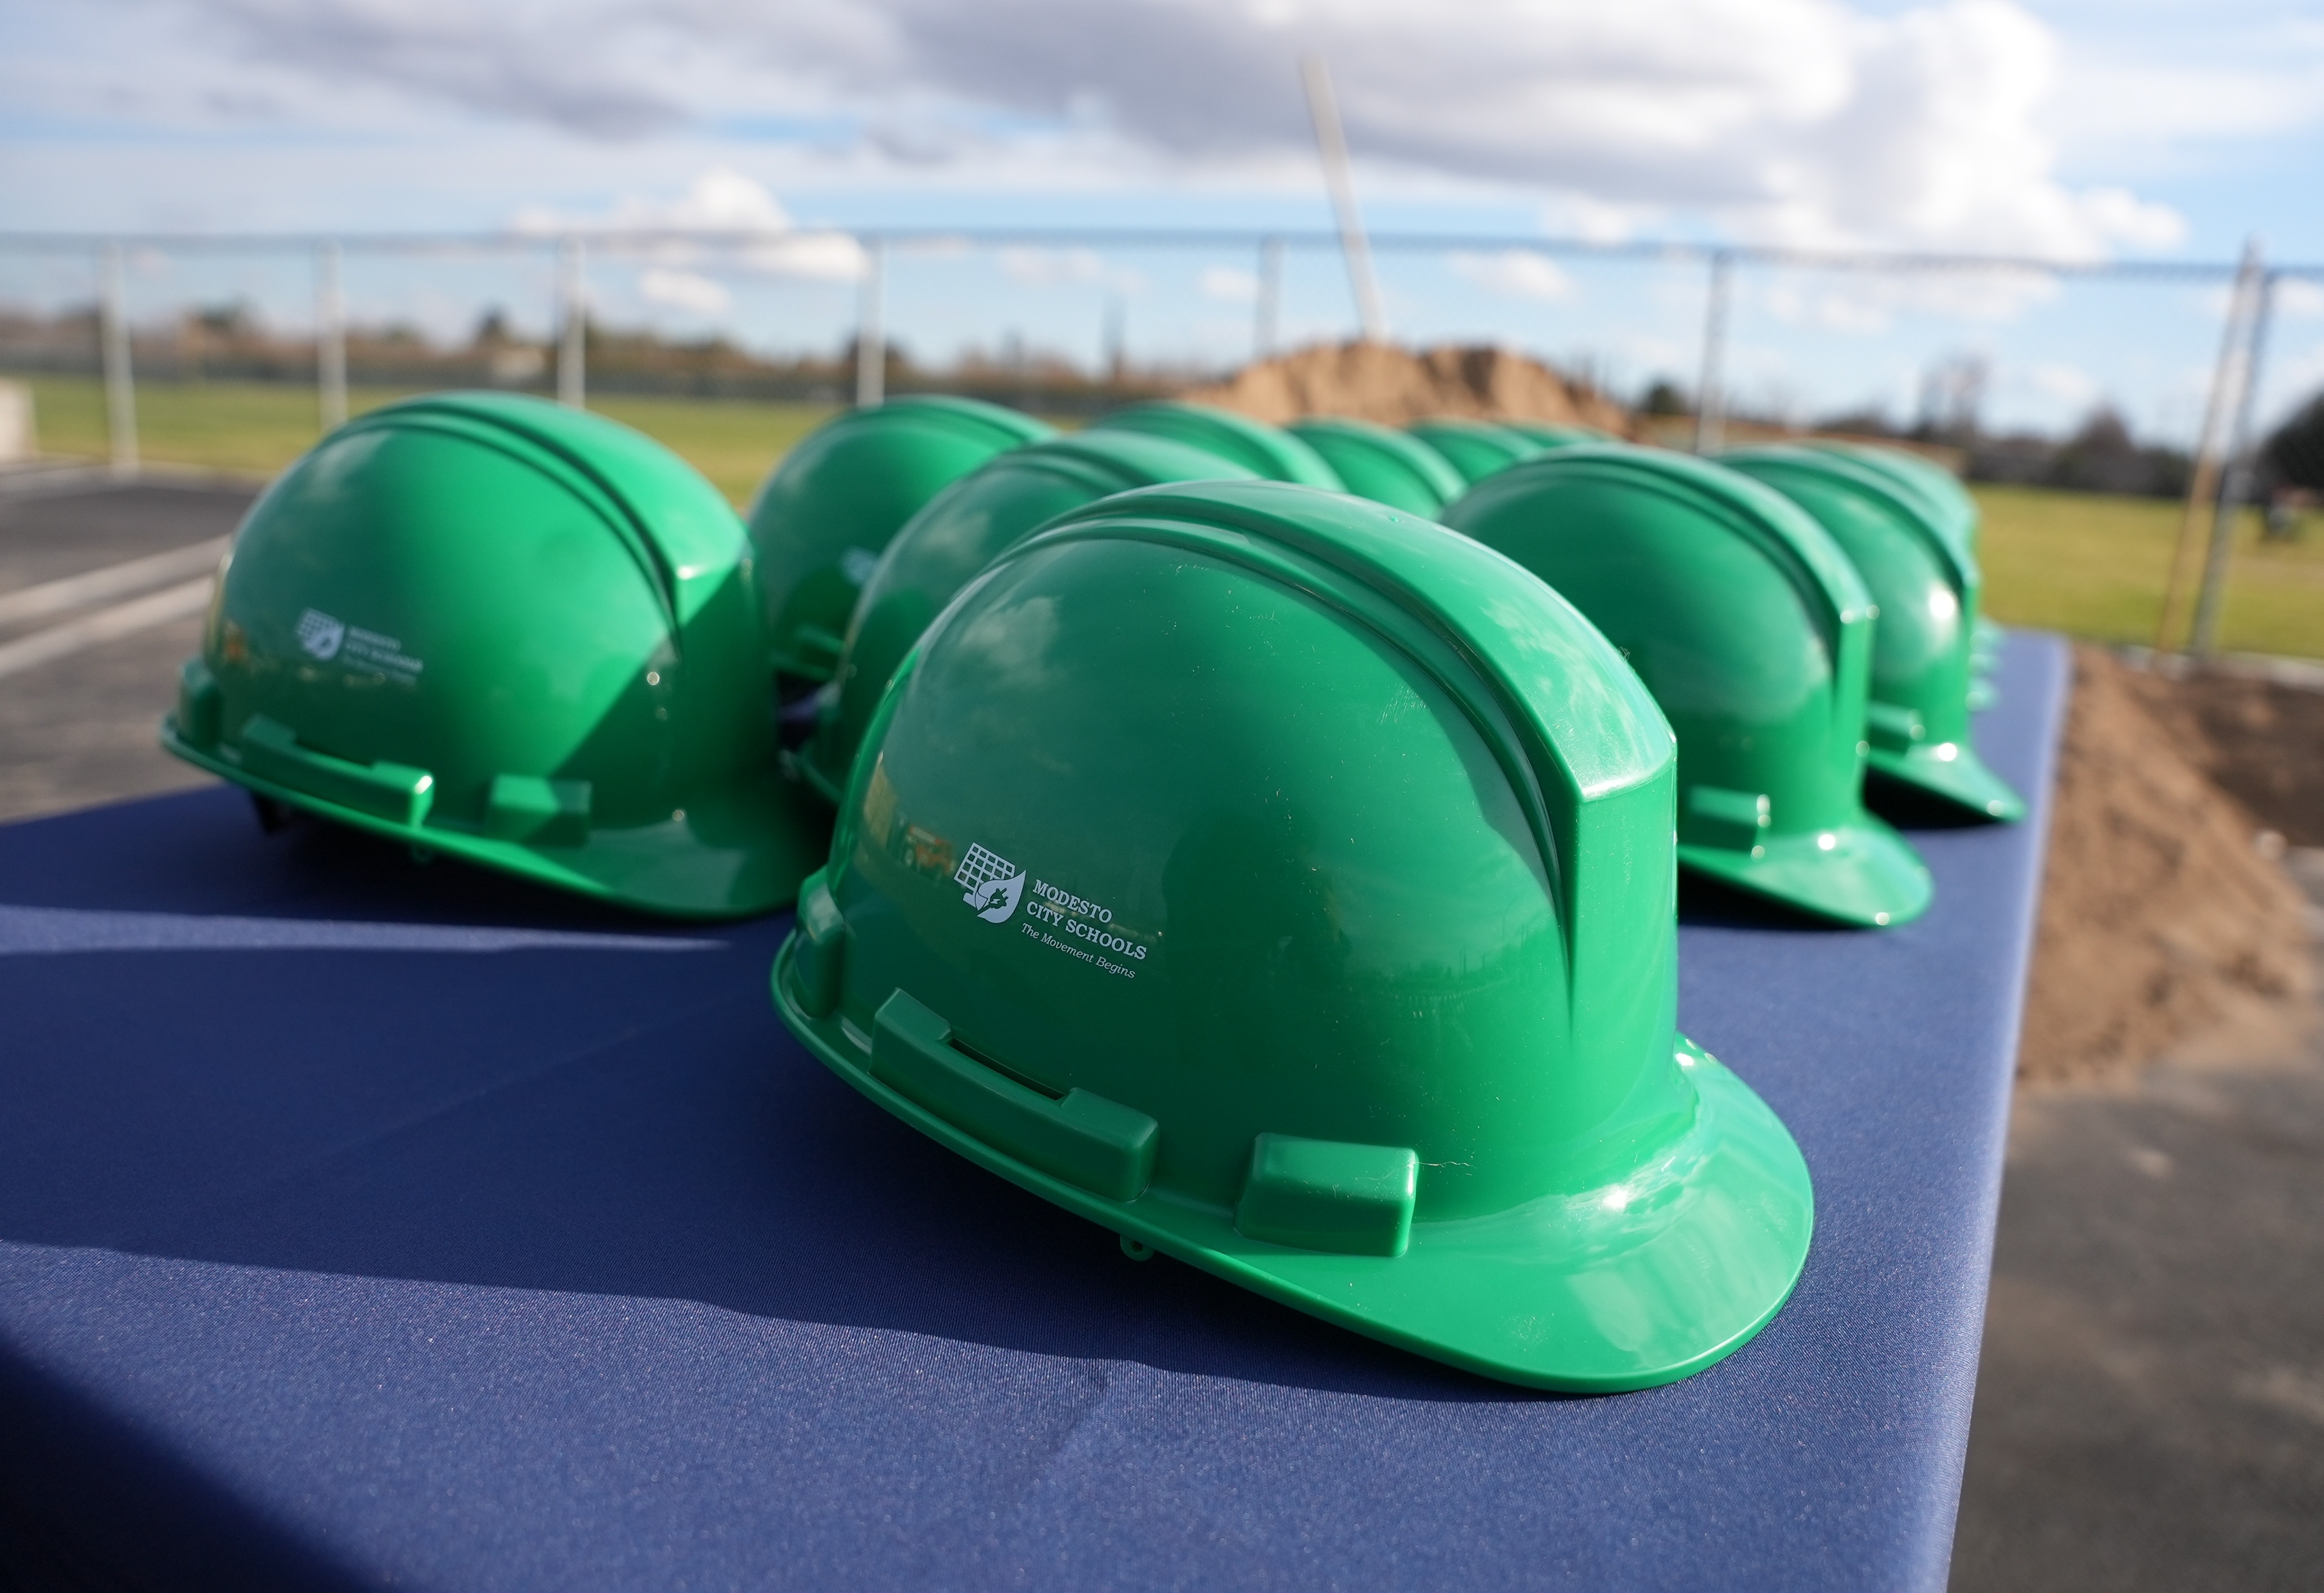 Green Construction Helmets on table